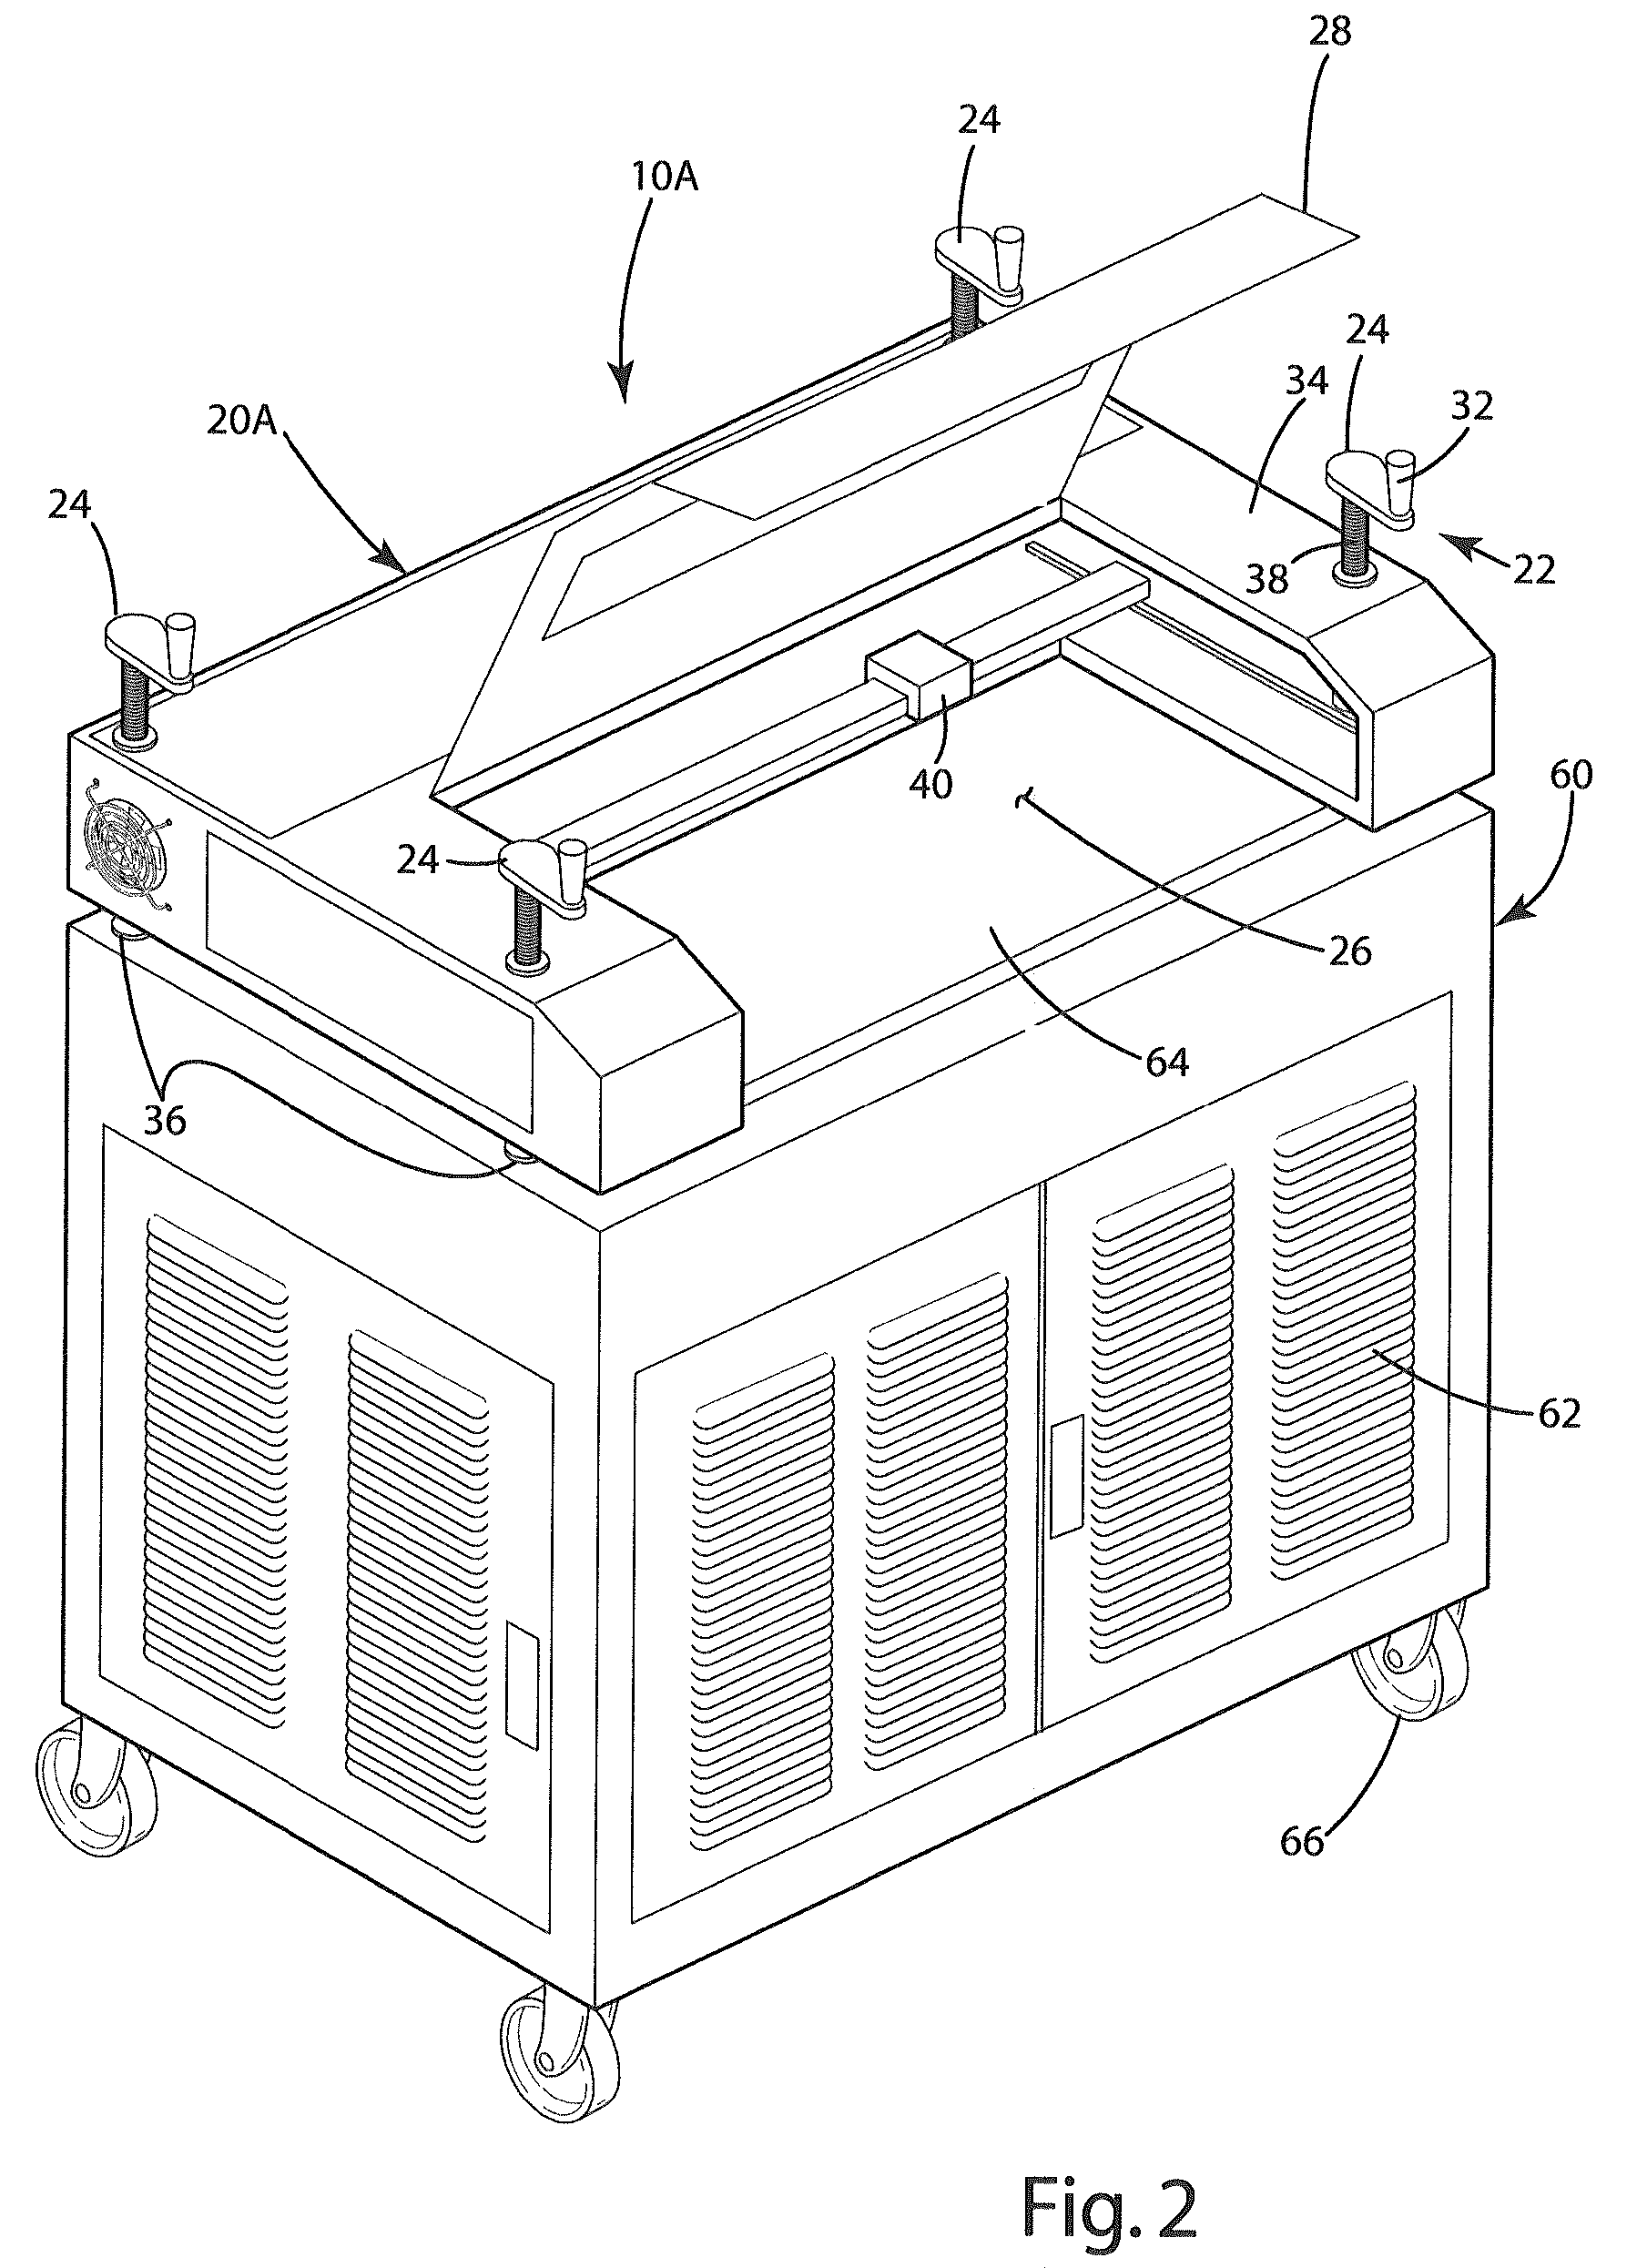 Portable engraving system